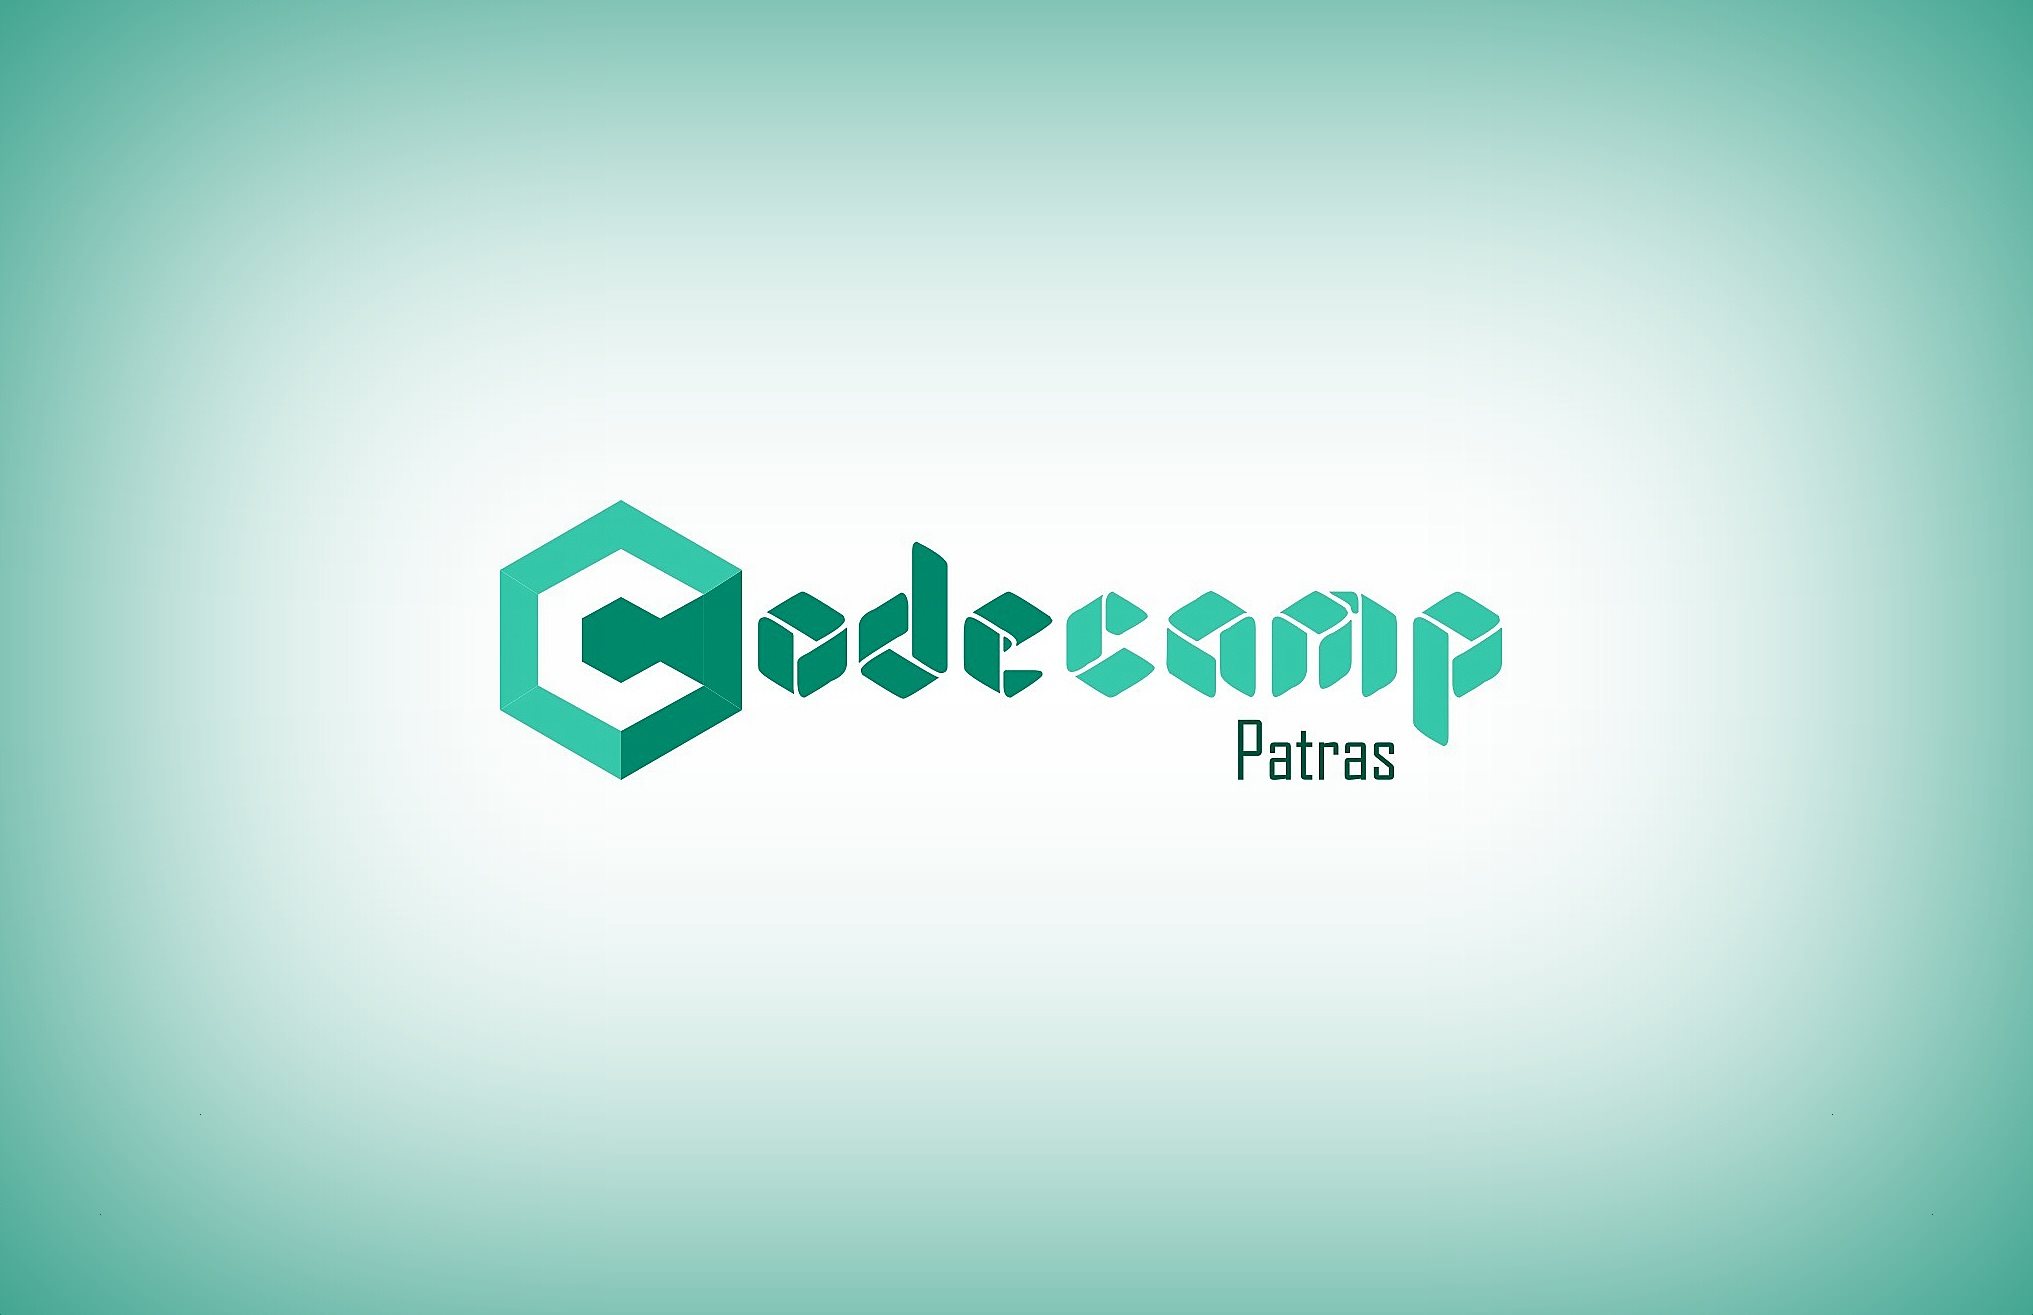 Vongrid at Codecamp 2021